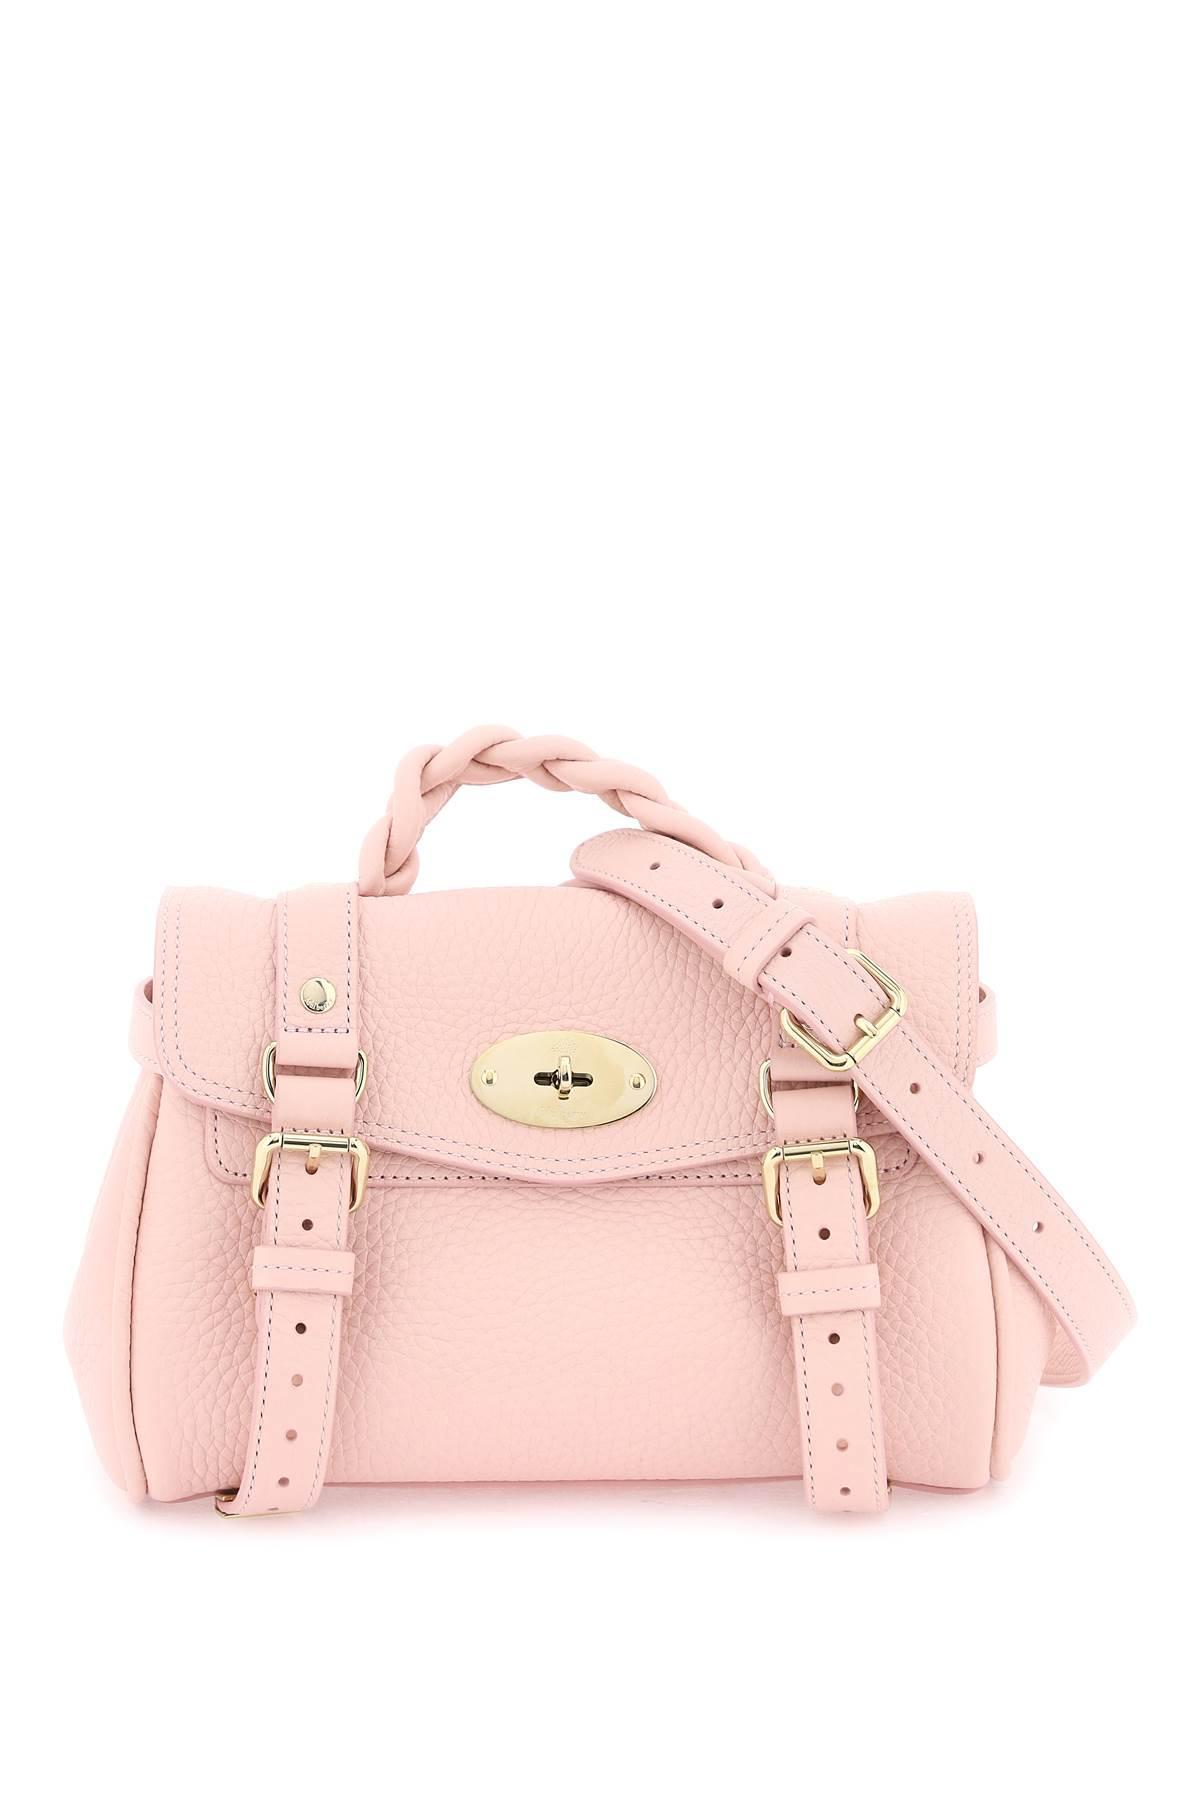 Meget hensynsfuld møde Mulberry 'alexa' Mini Bag in Pink | Lyst